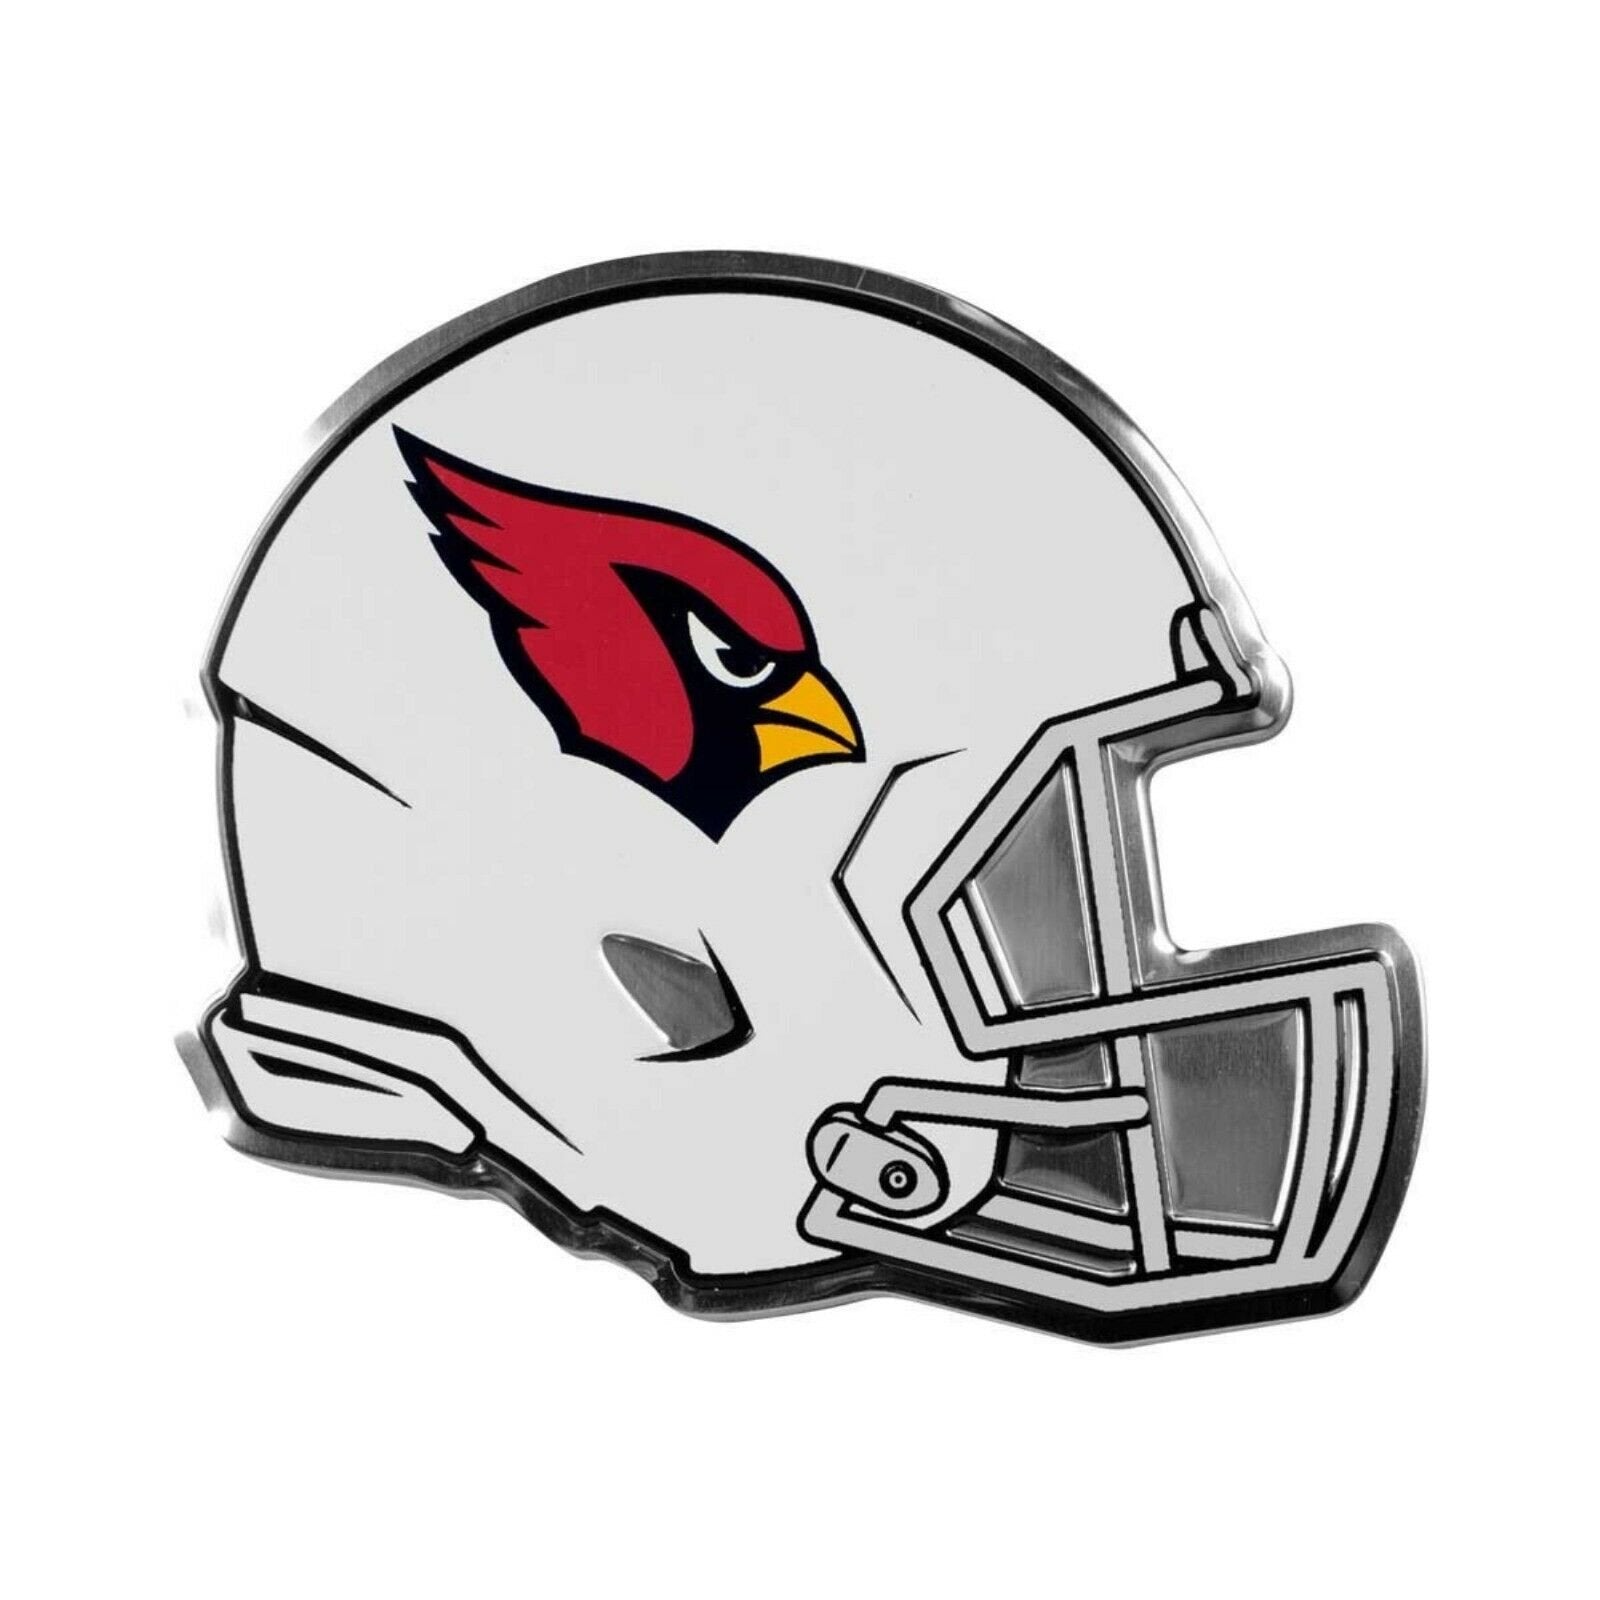 Arizona Cardinals Helmet Auto Emblem, Aluminum Metal, Embossed Team Color, Raised Decal Sticker, Full Adhesive Backing